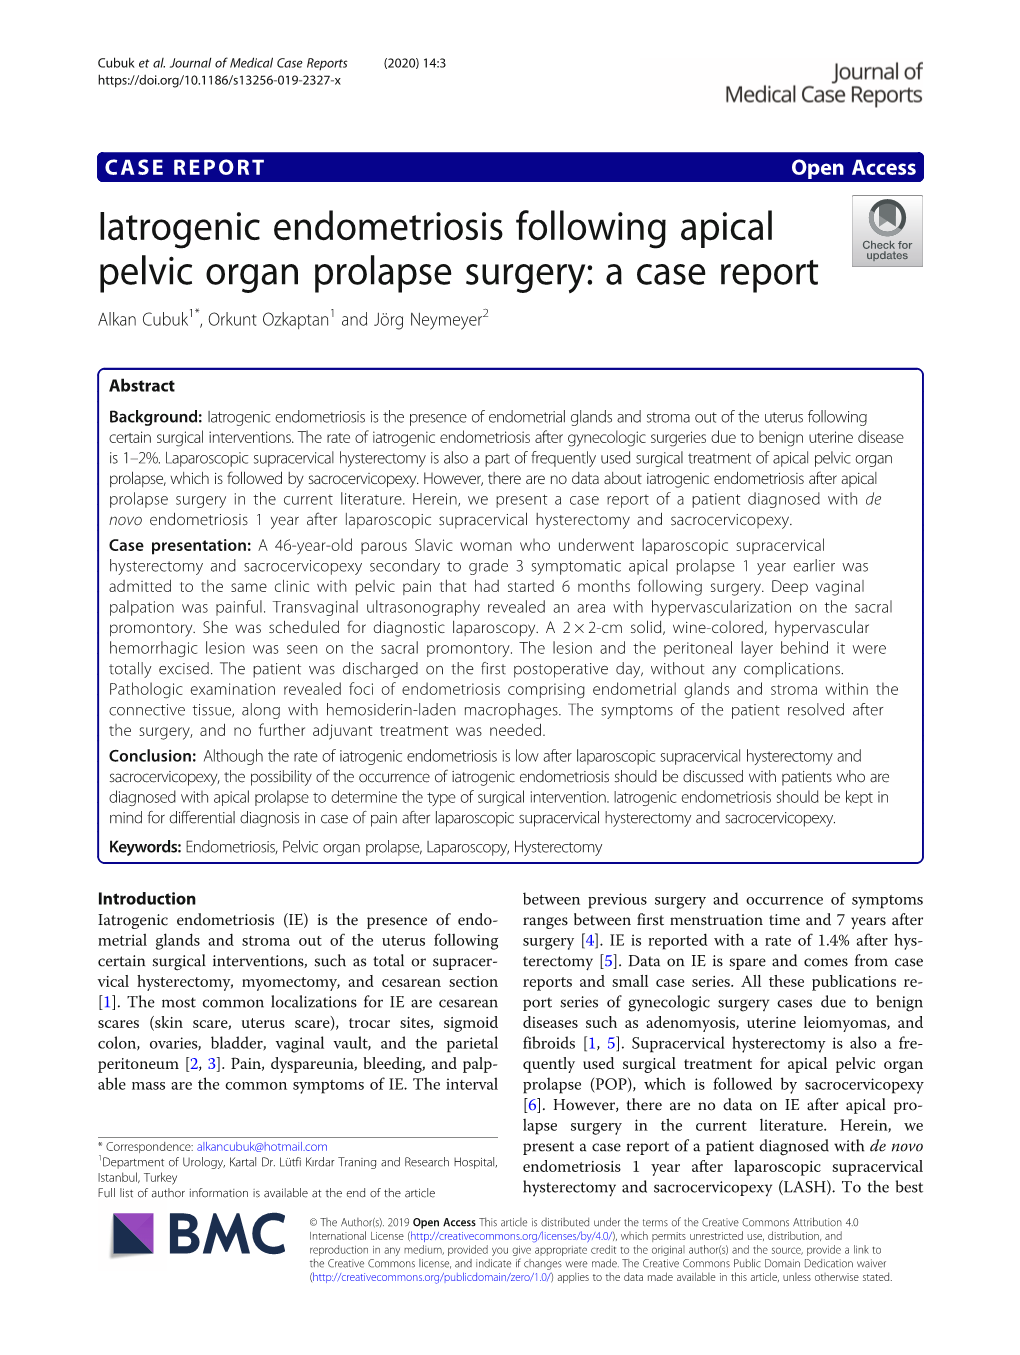 Iatrogenic Endometriosis Following Apical Pelvic Organ Prolapse Surgery: a Case Report Alkan Cubuk1*, Orkunt Ozkaptan1 and Jörg Neymeyer2